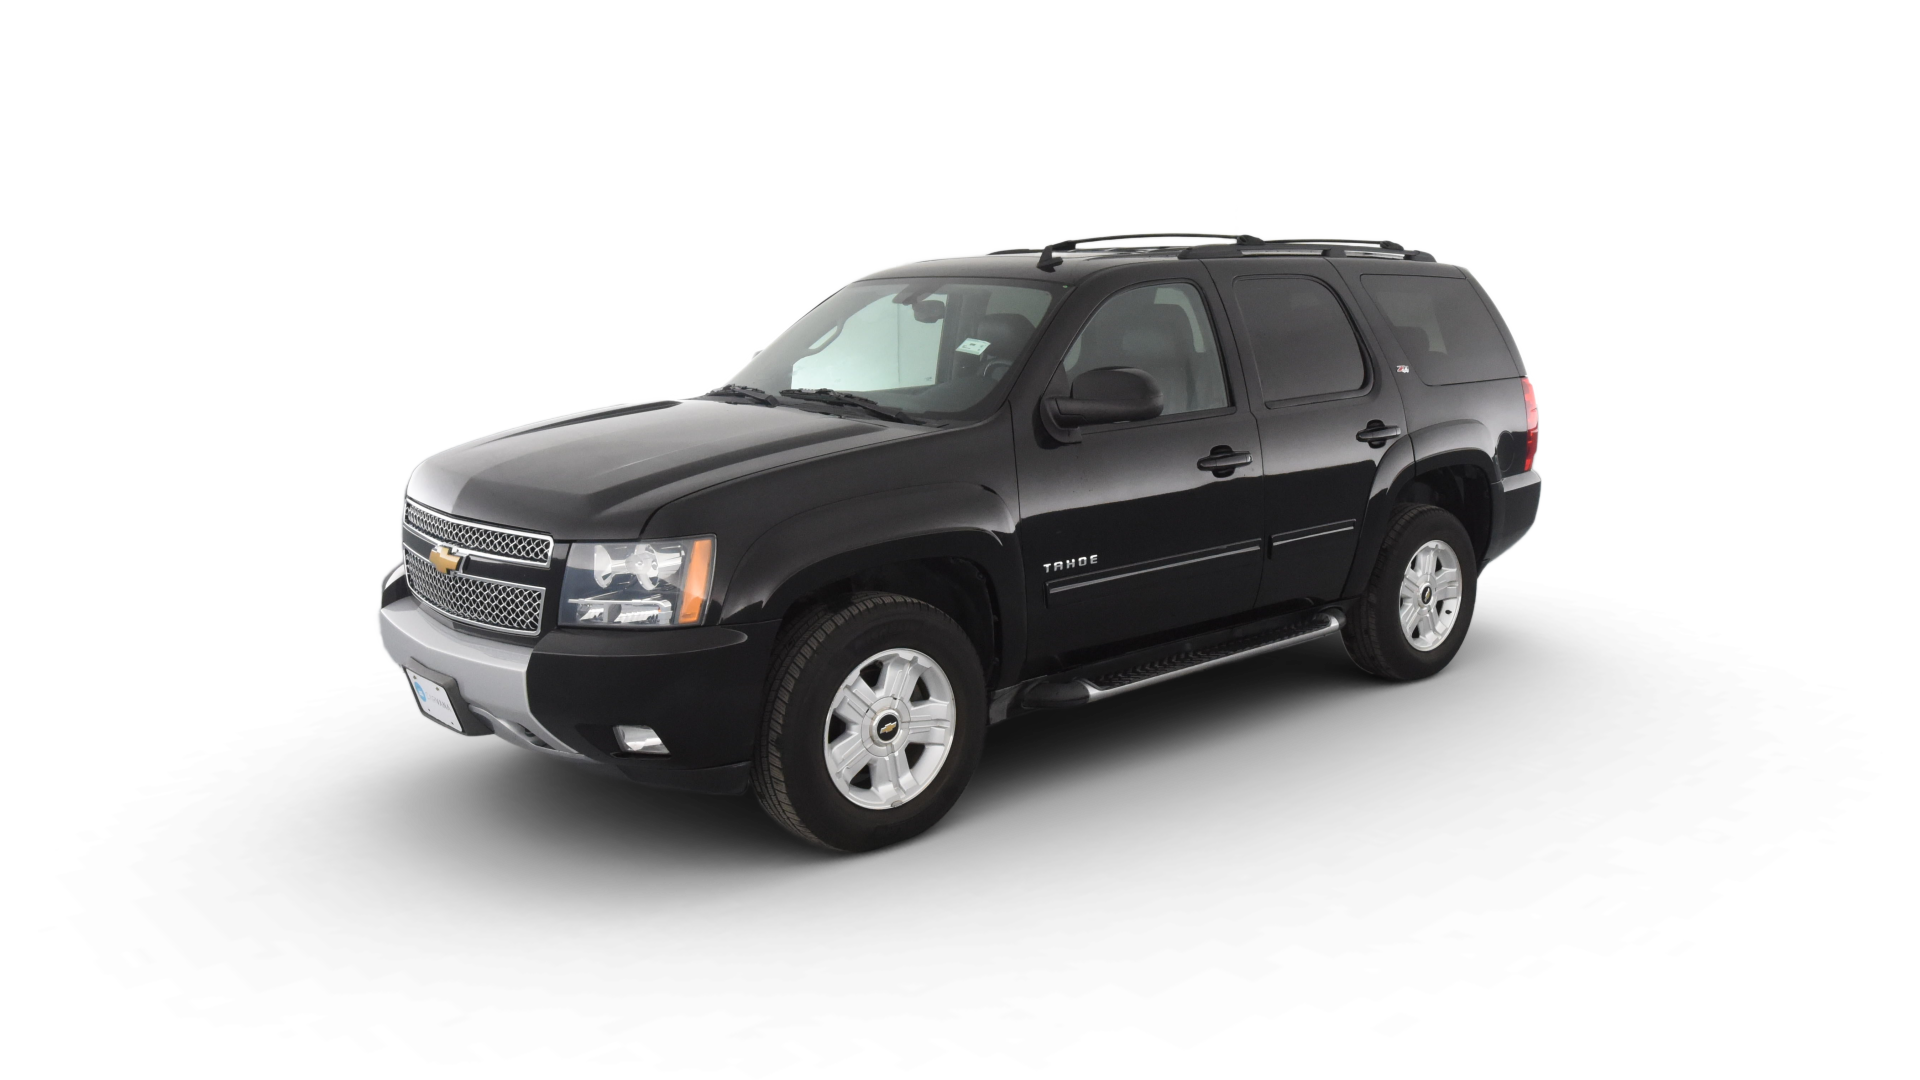 Chevrolet Tahoe model image.